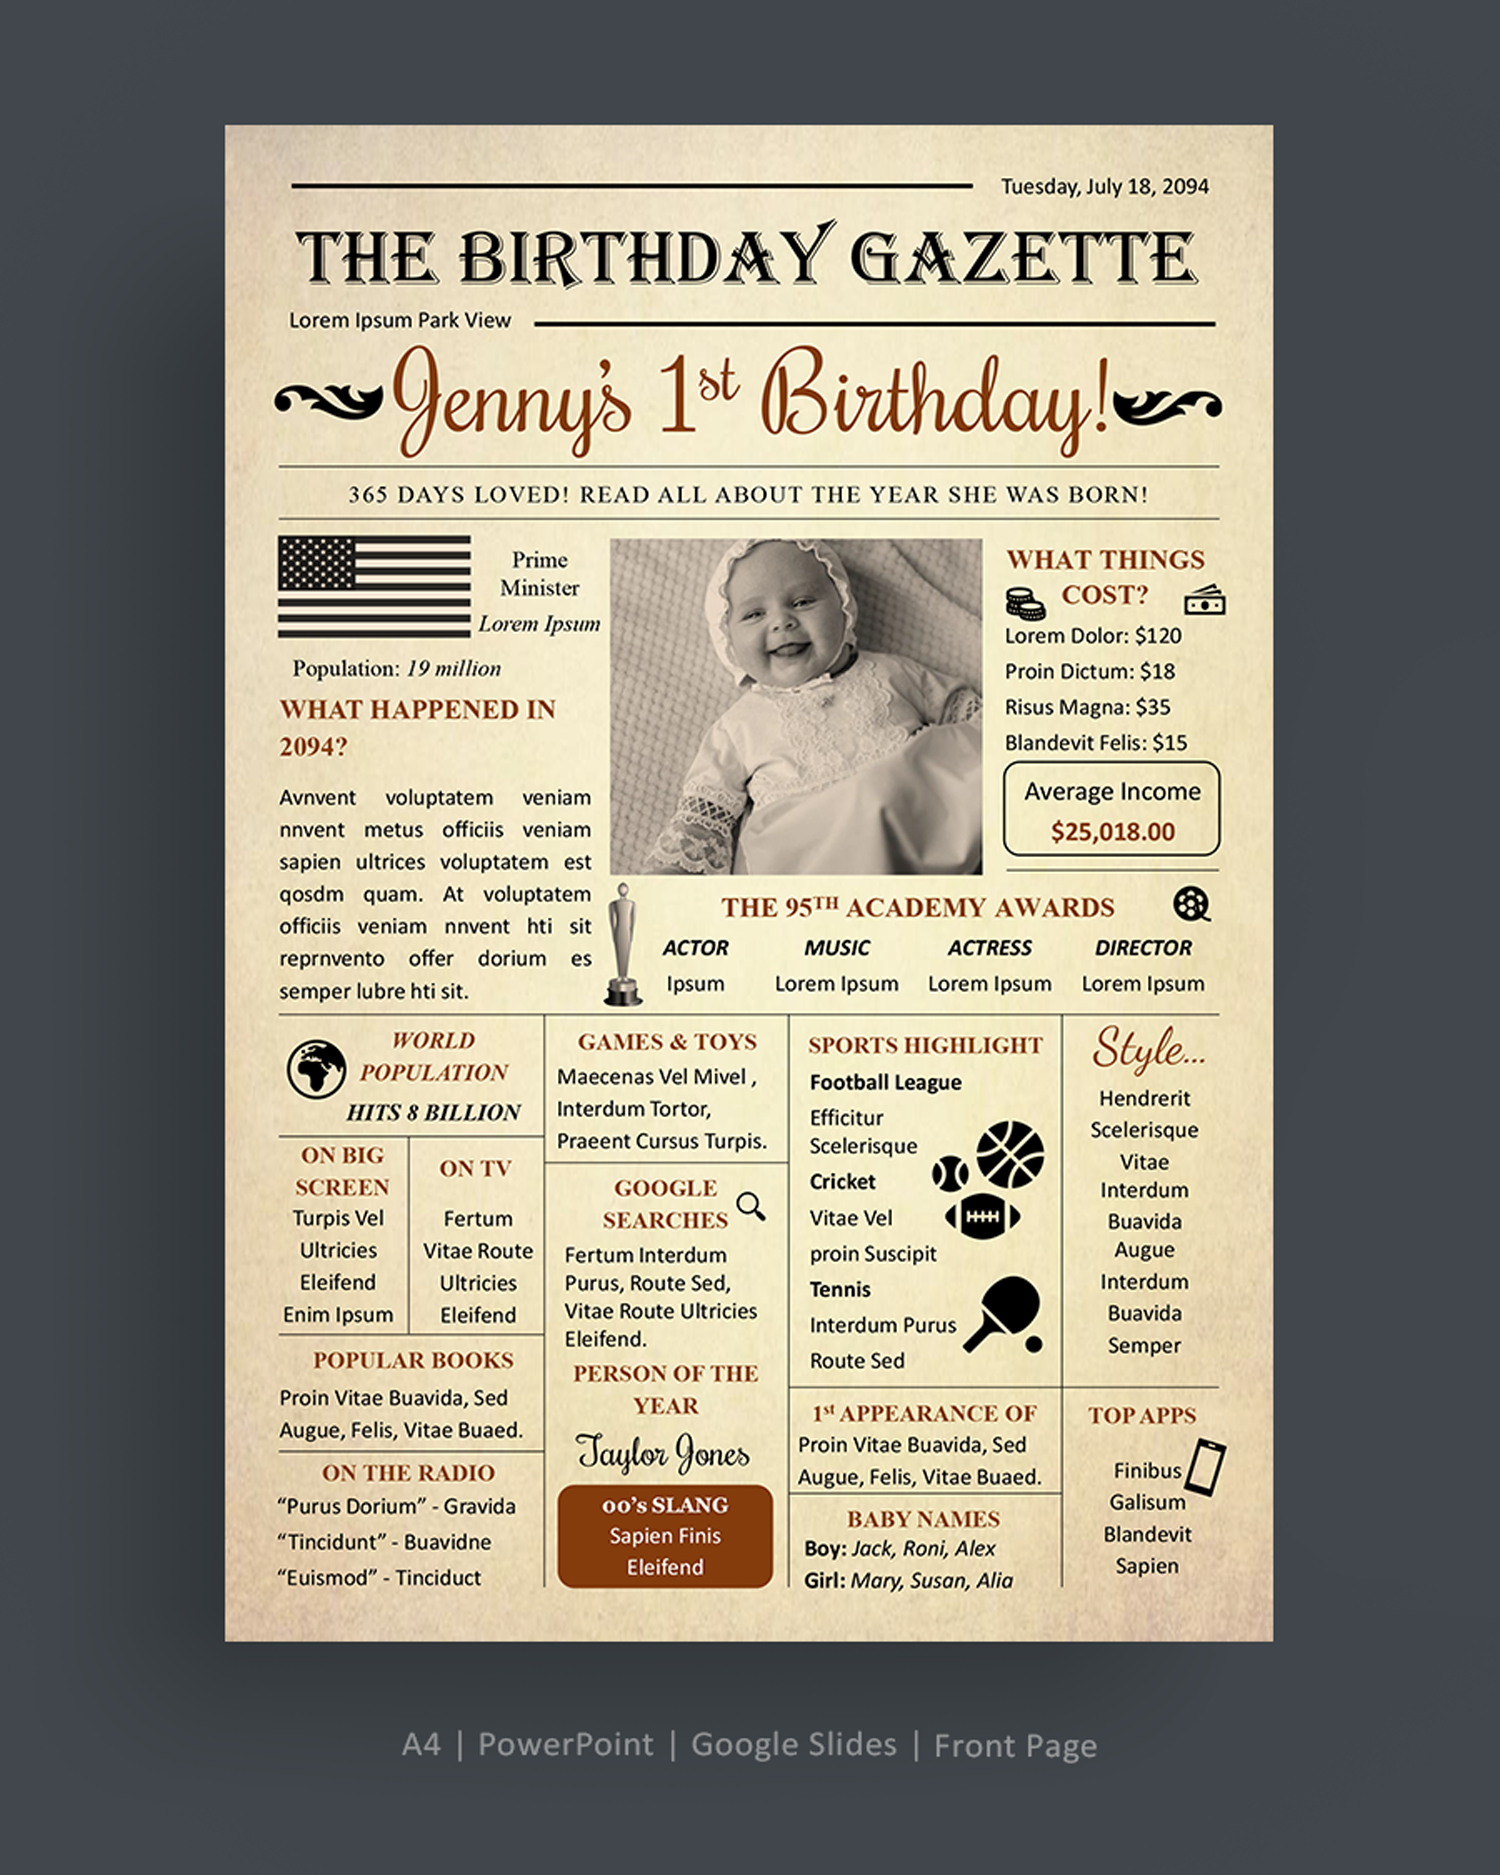 1st Birthday Vintage Style Newspaper Template - PowerPoint, Google Slides